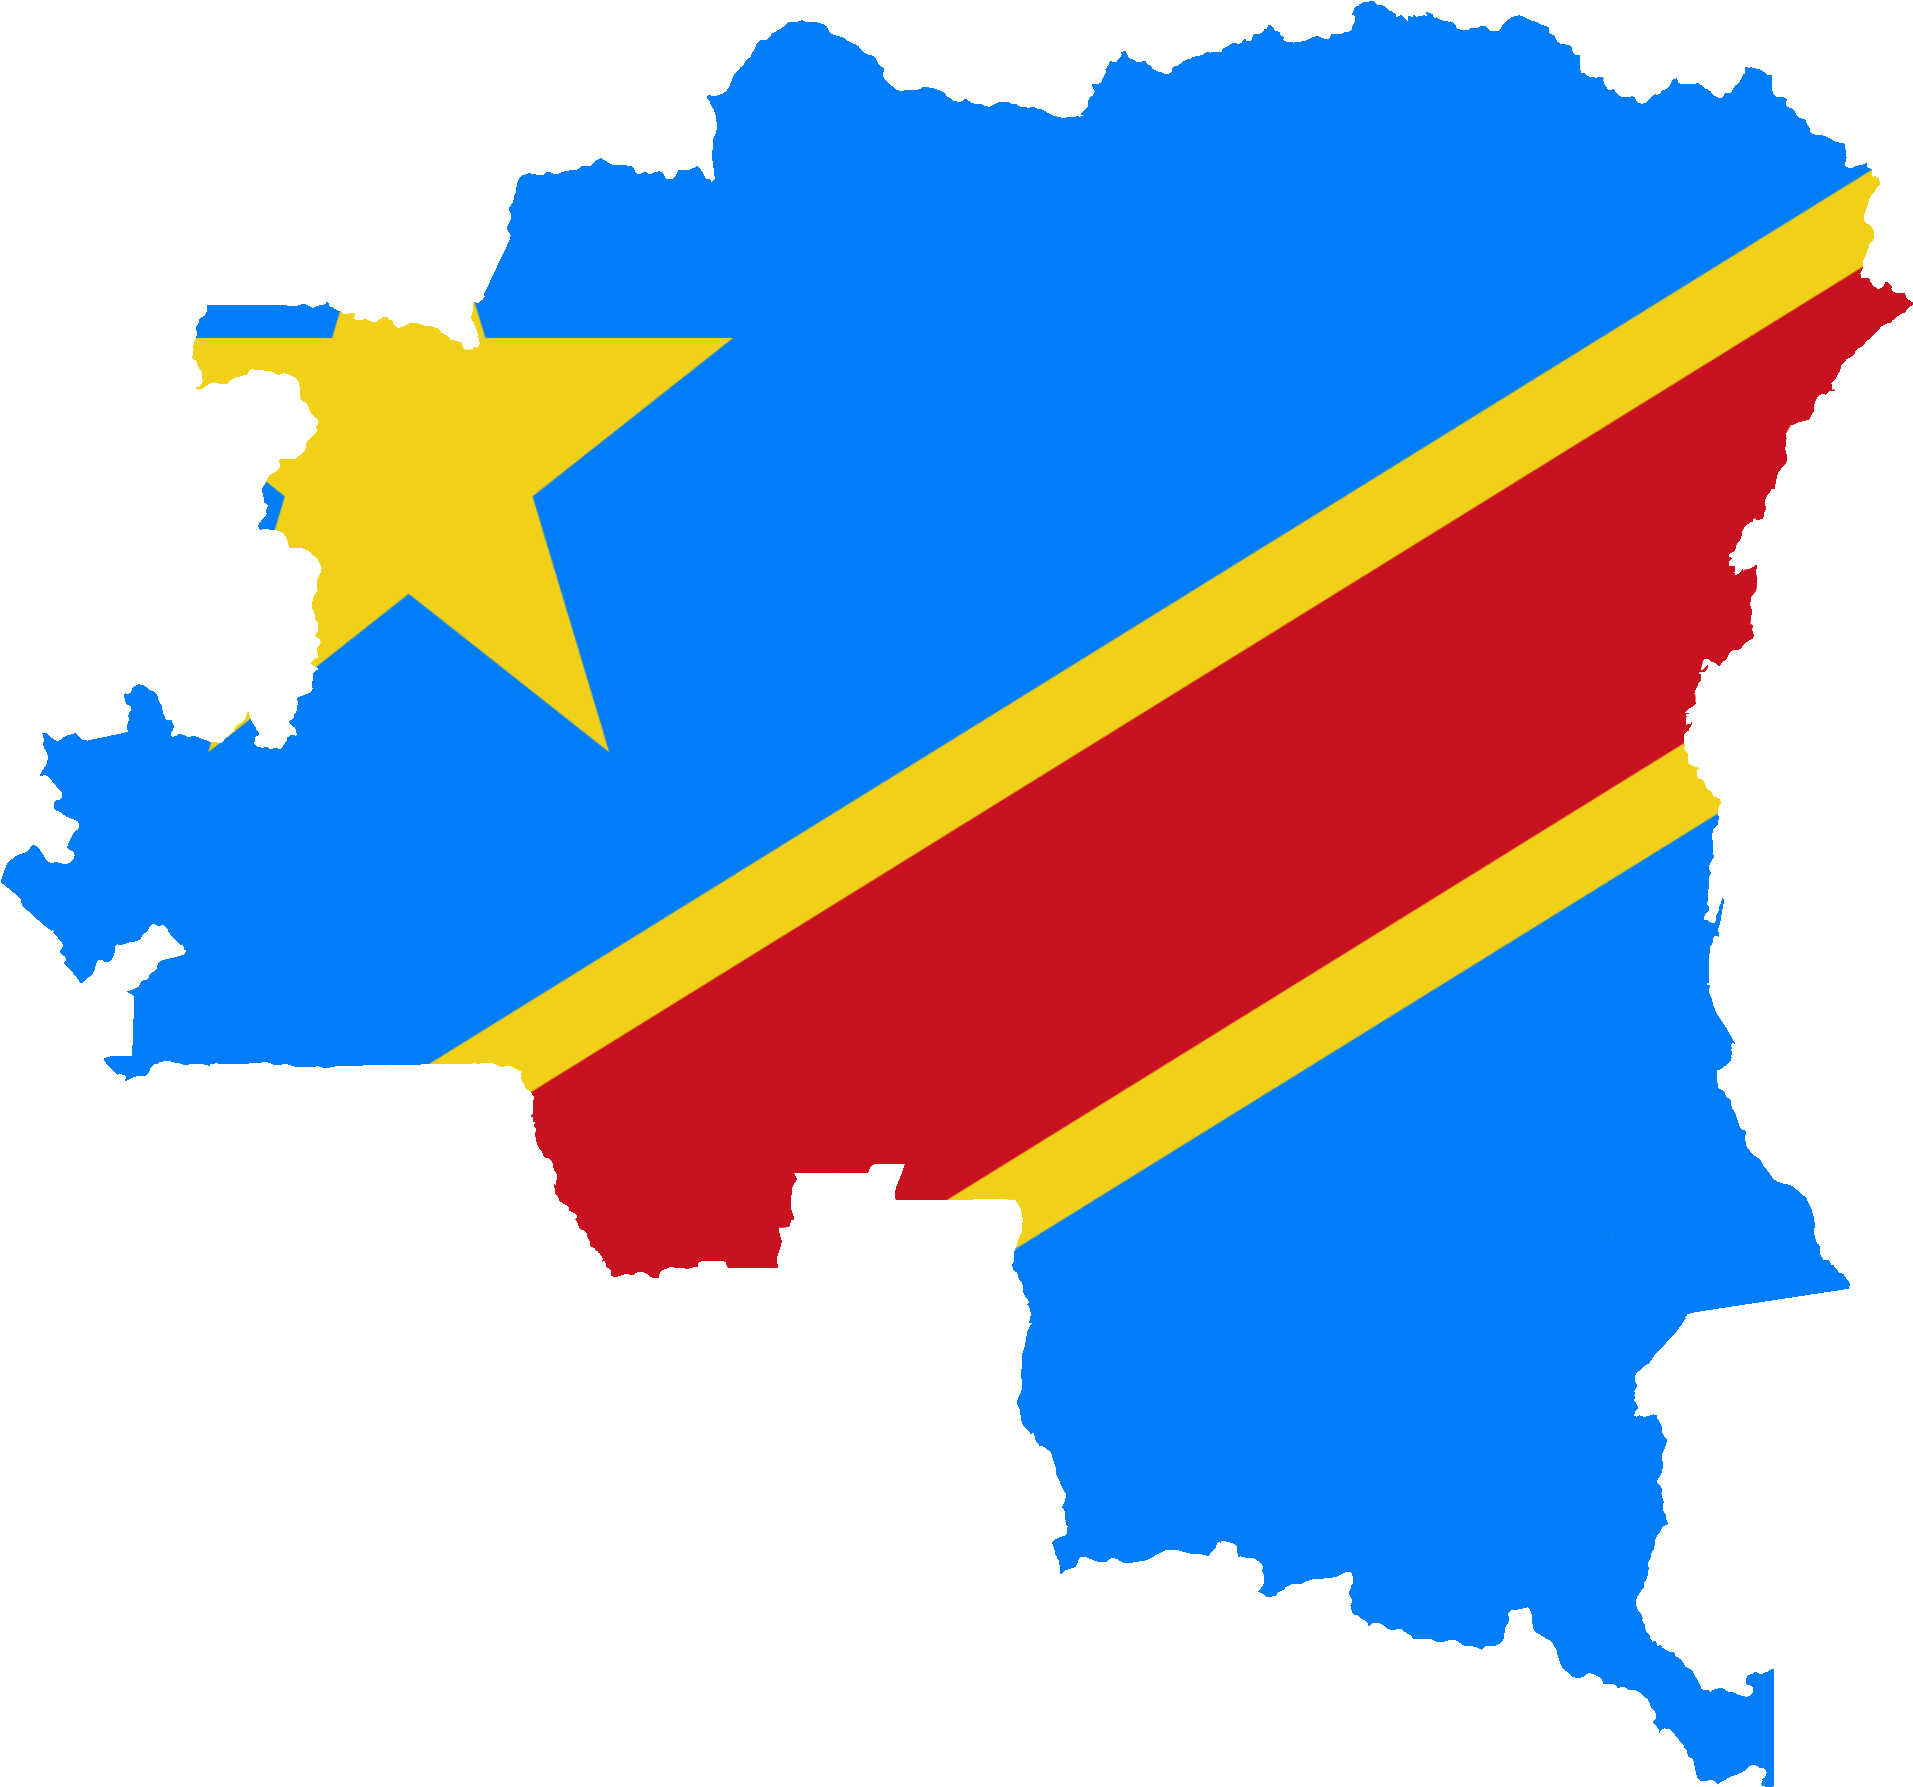 Democratic Republicof Congo Map Outline